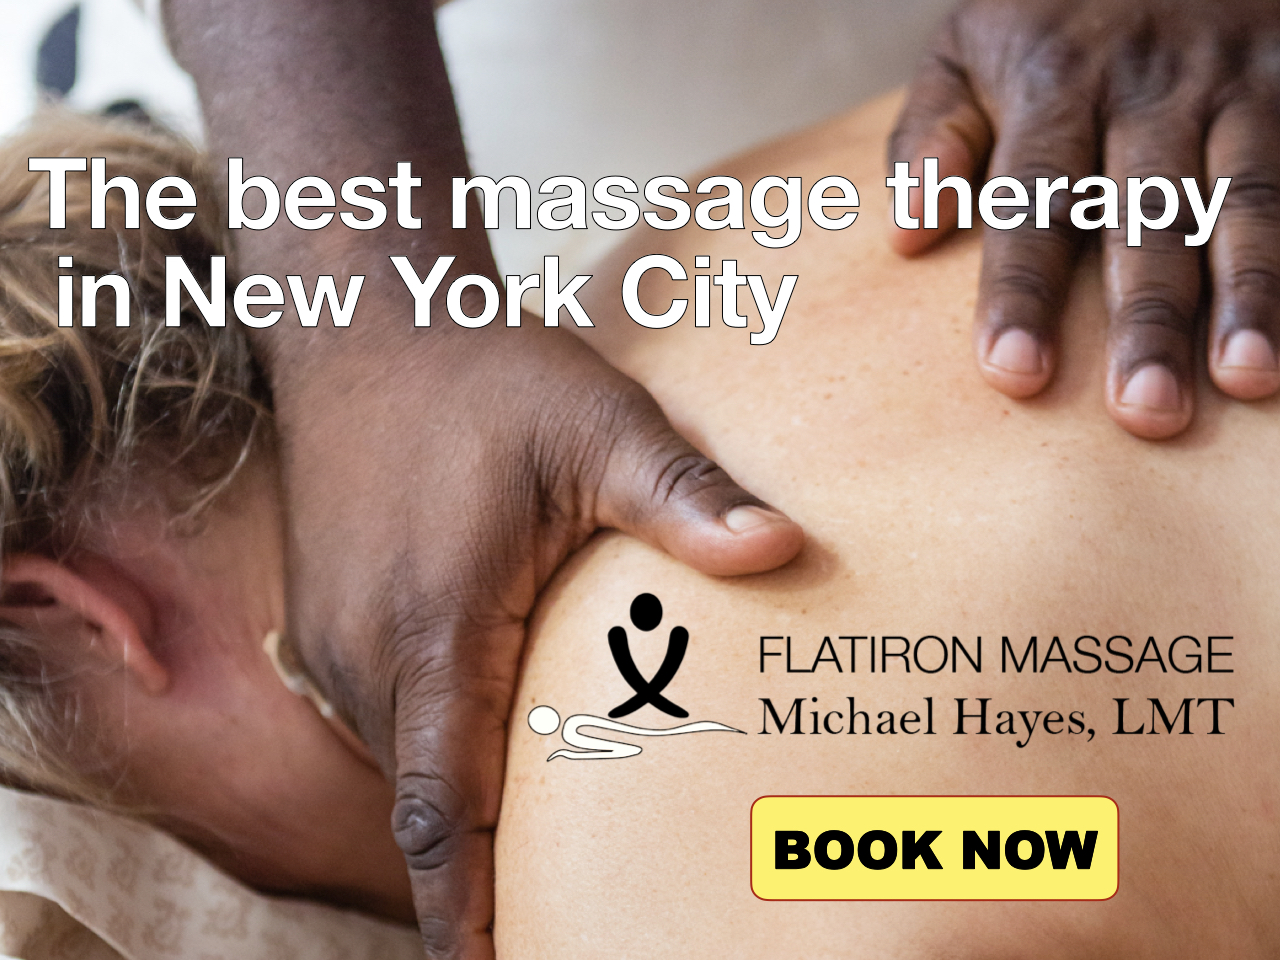 Michael Hayes, LMT, is the best massage therapist in New York City. His massage studio, Flatiron Massage, is located near Union Square, Manhattan.